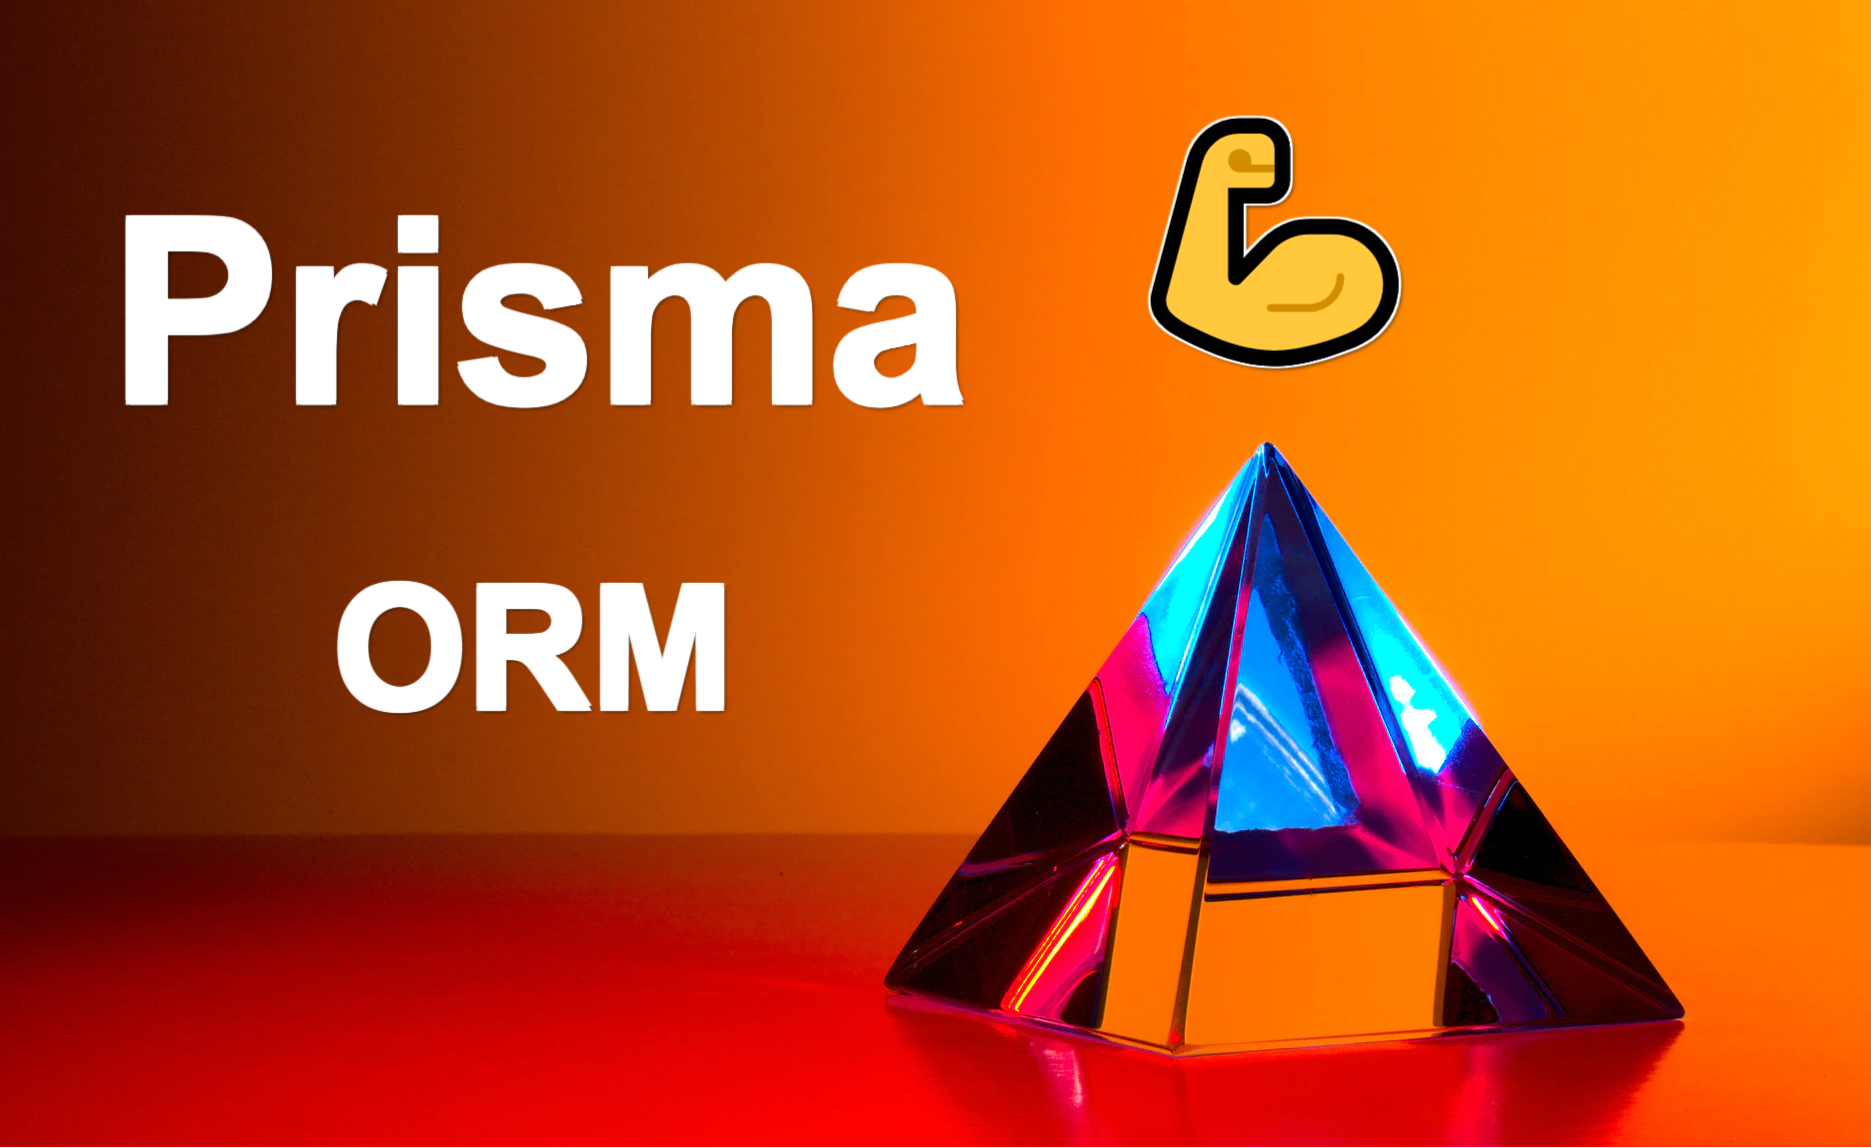 Prisma orm. ORM Призма. Prisma ORM logo. Prisma Launcher. Rainbow Prisma.